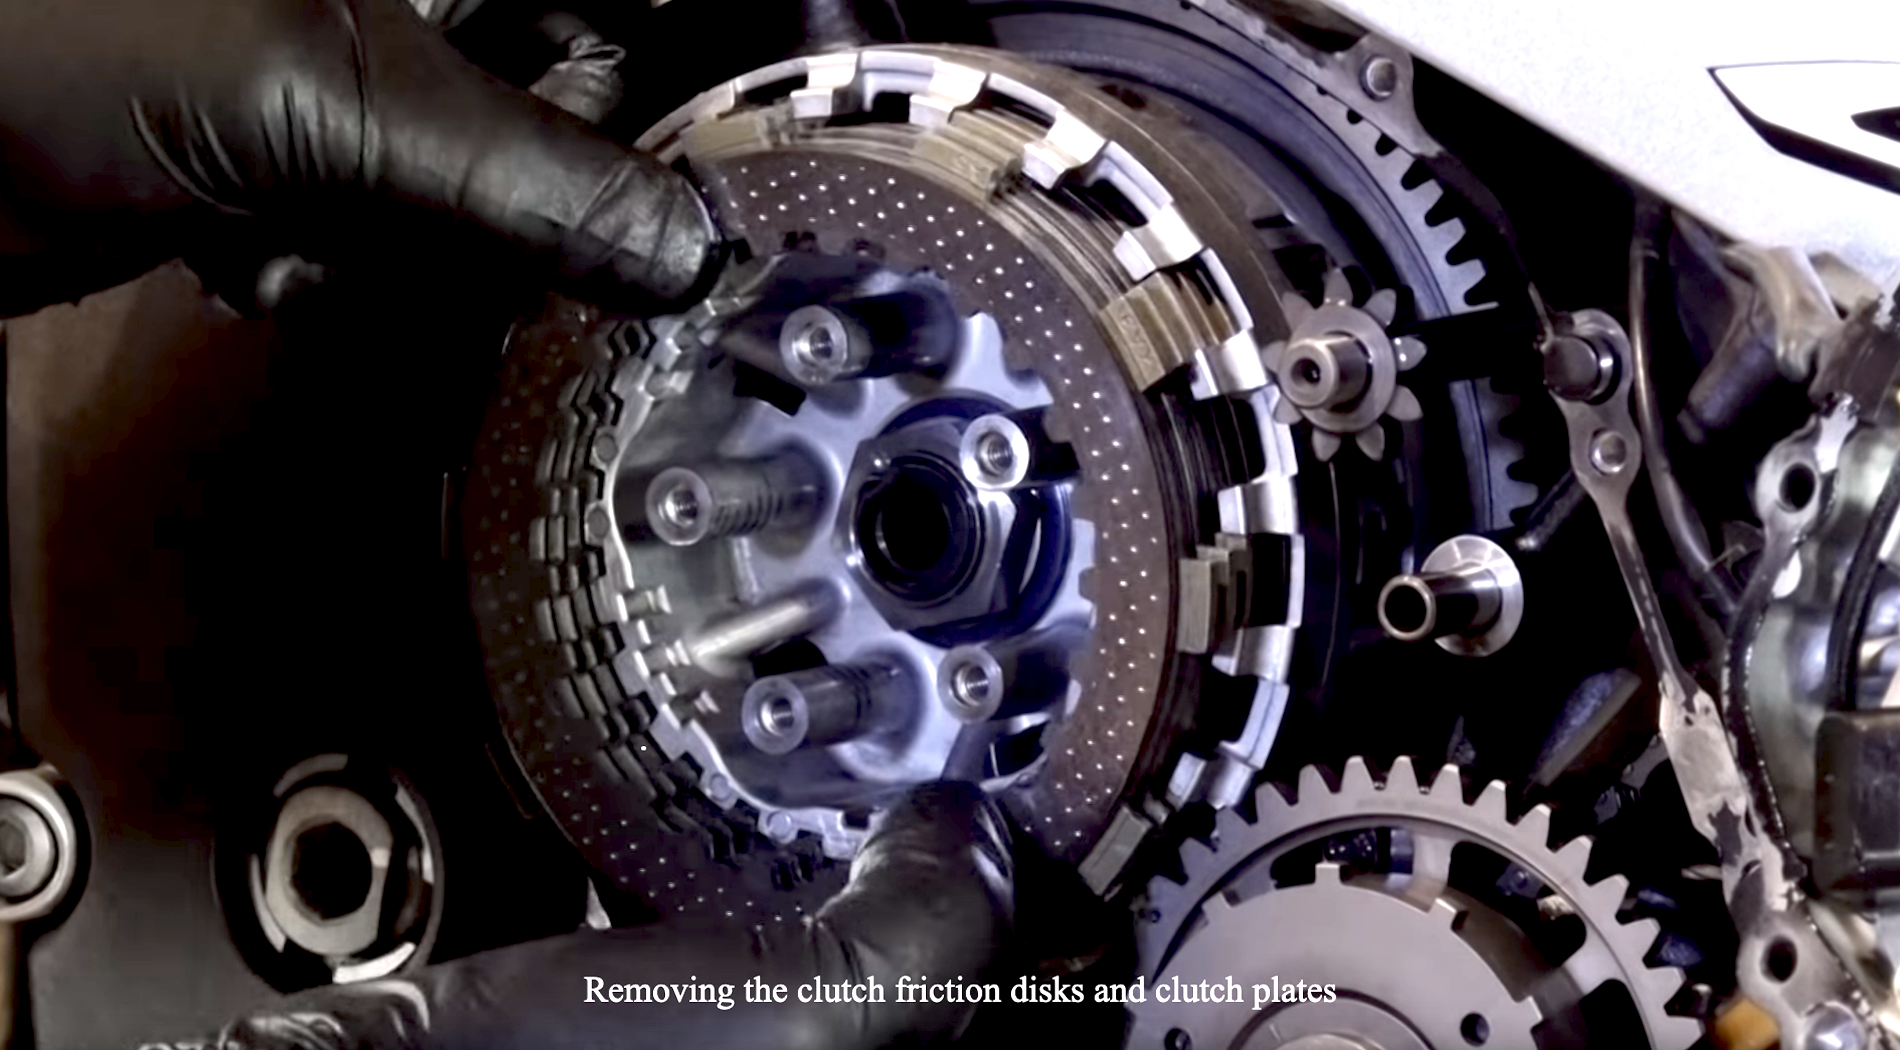 Honda CBR600 clutch rebuild friction disks removal